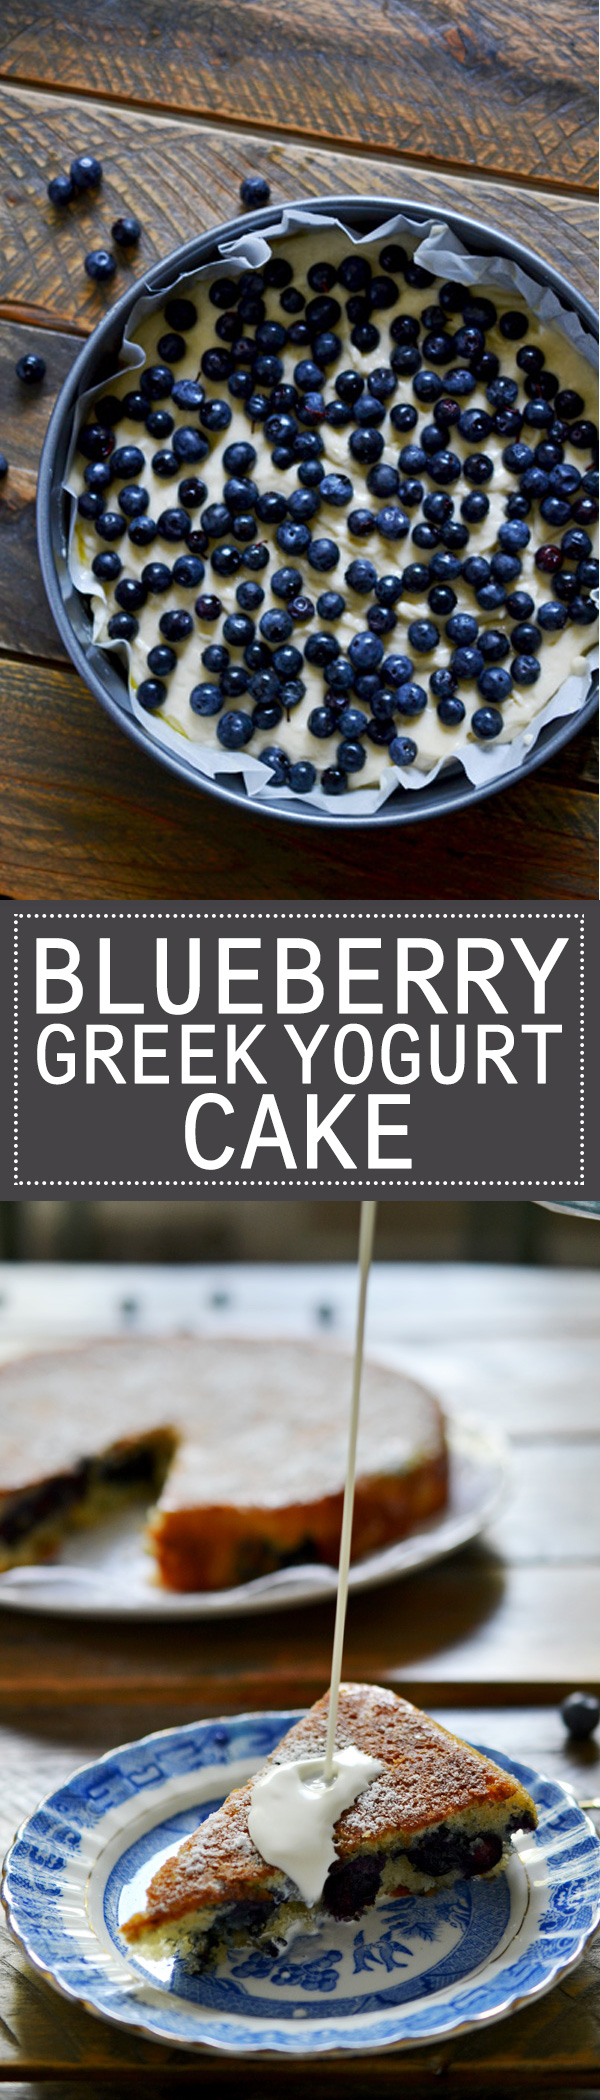 blueberry-greek-yogurt-cake-PINTEREST